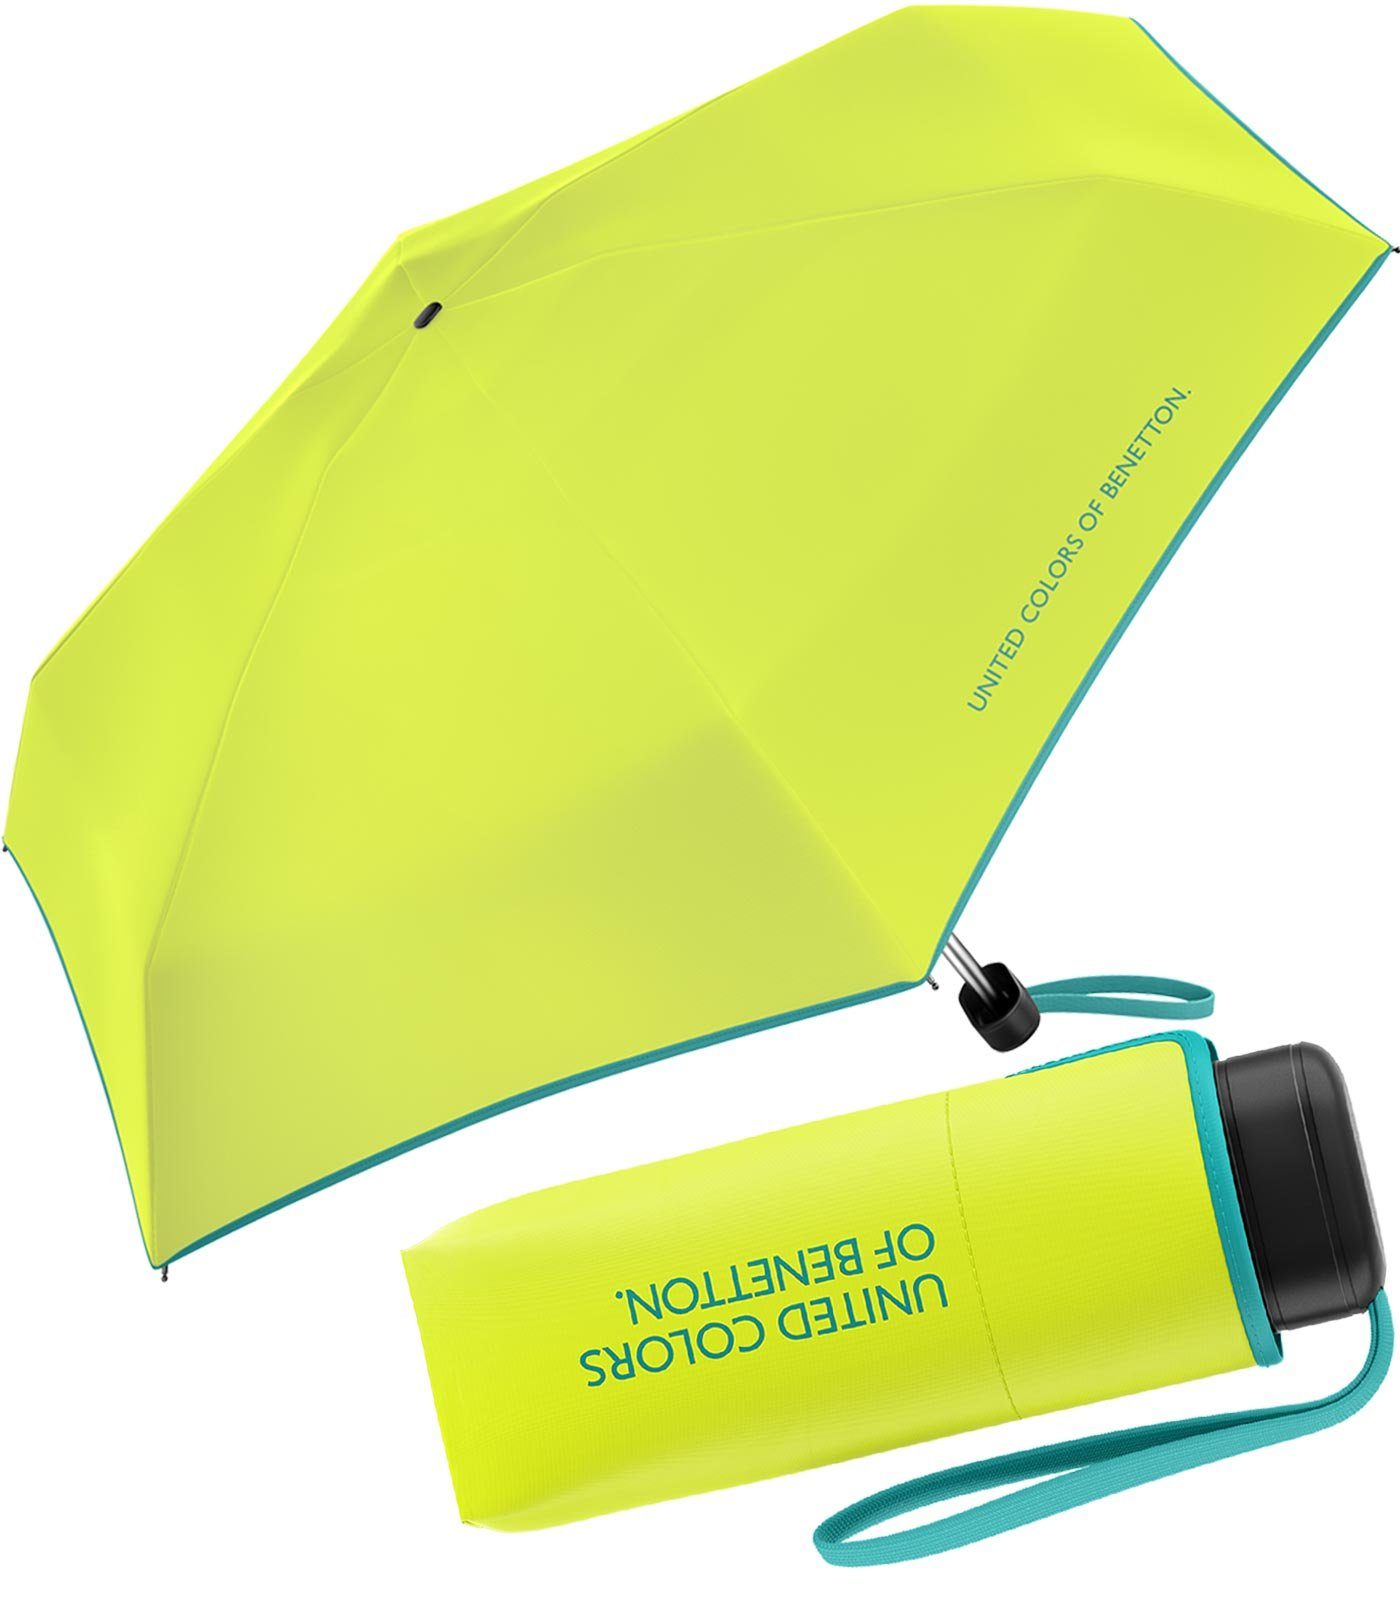 United Colors of Benetton Taschenregenschirm Ultra Mini Flat HW 2022 - lime punch, leuchtende Modefarben mit kontrastreichem Saum limette-petrol